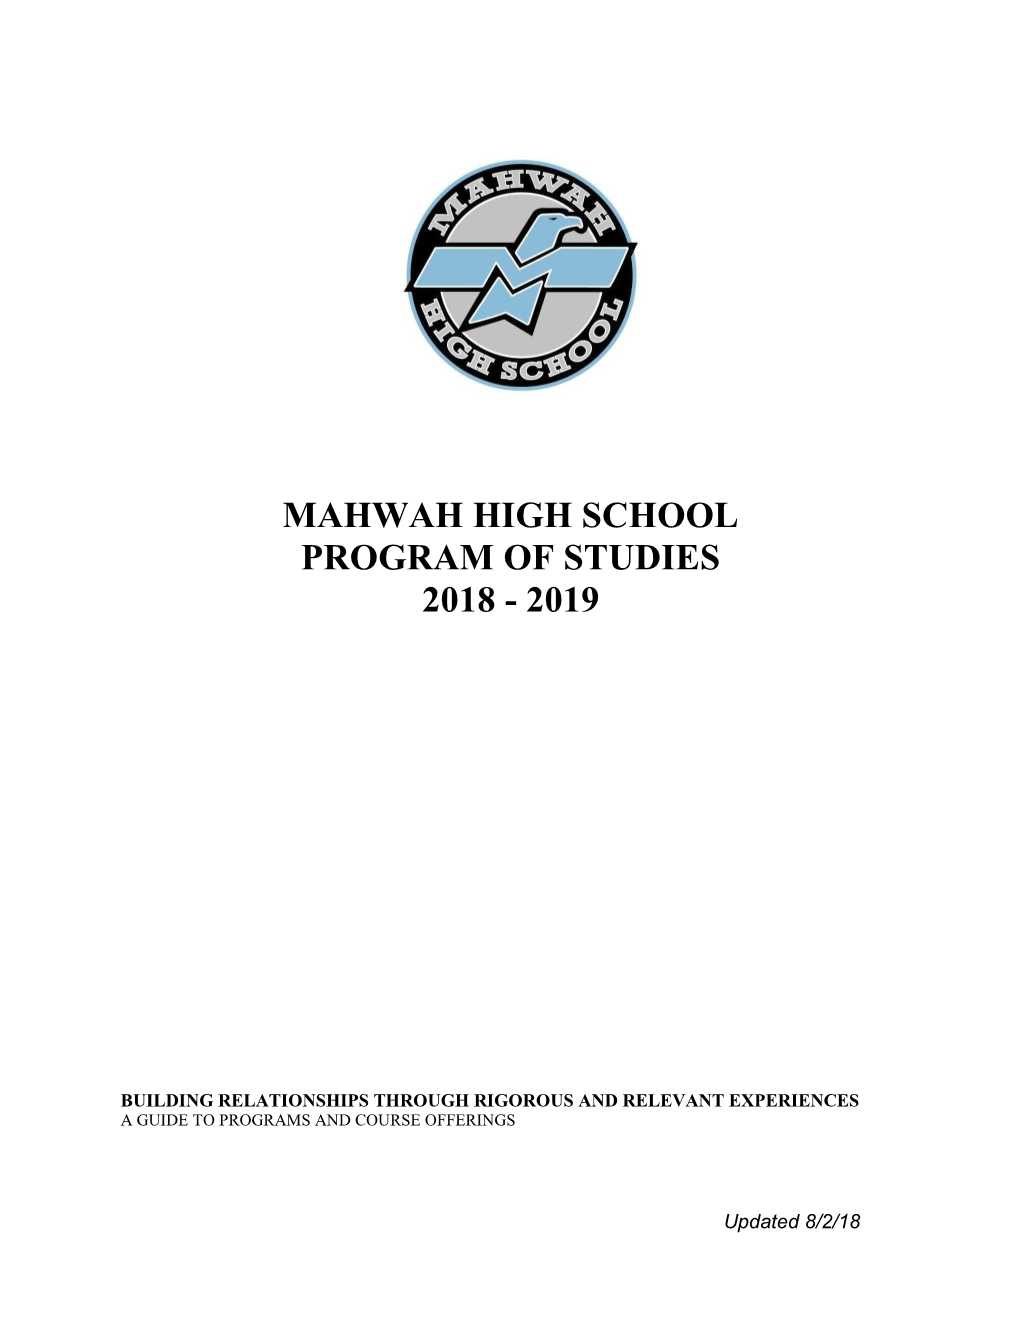 Mahwah High School Program of Studies 2018 - 2019